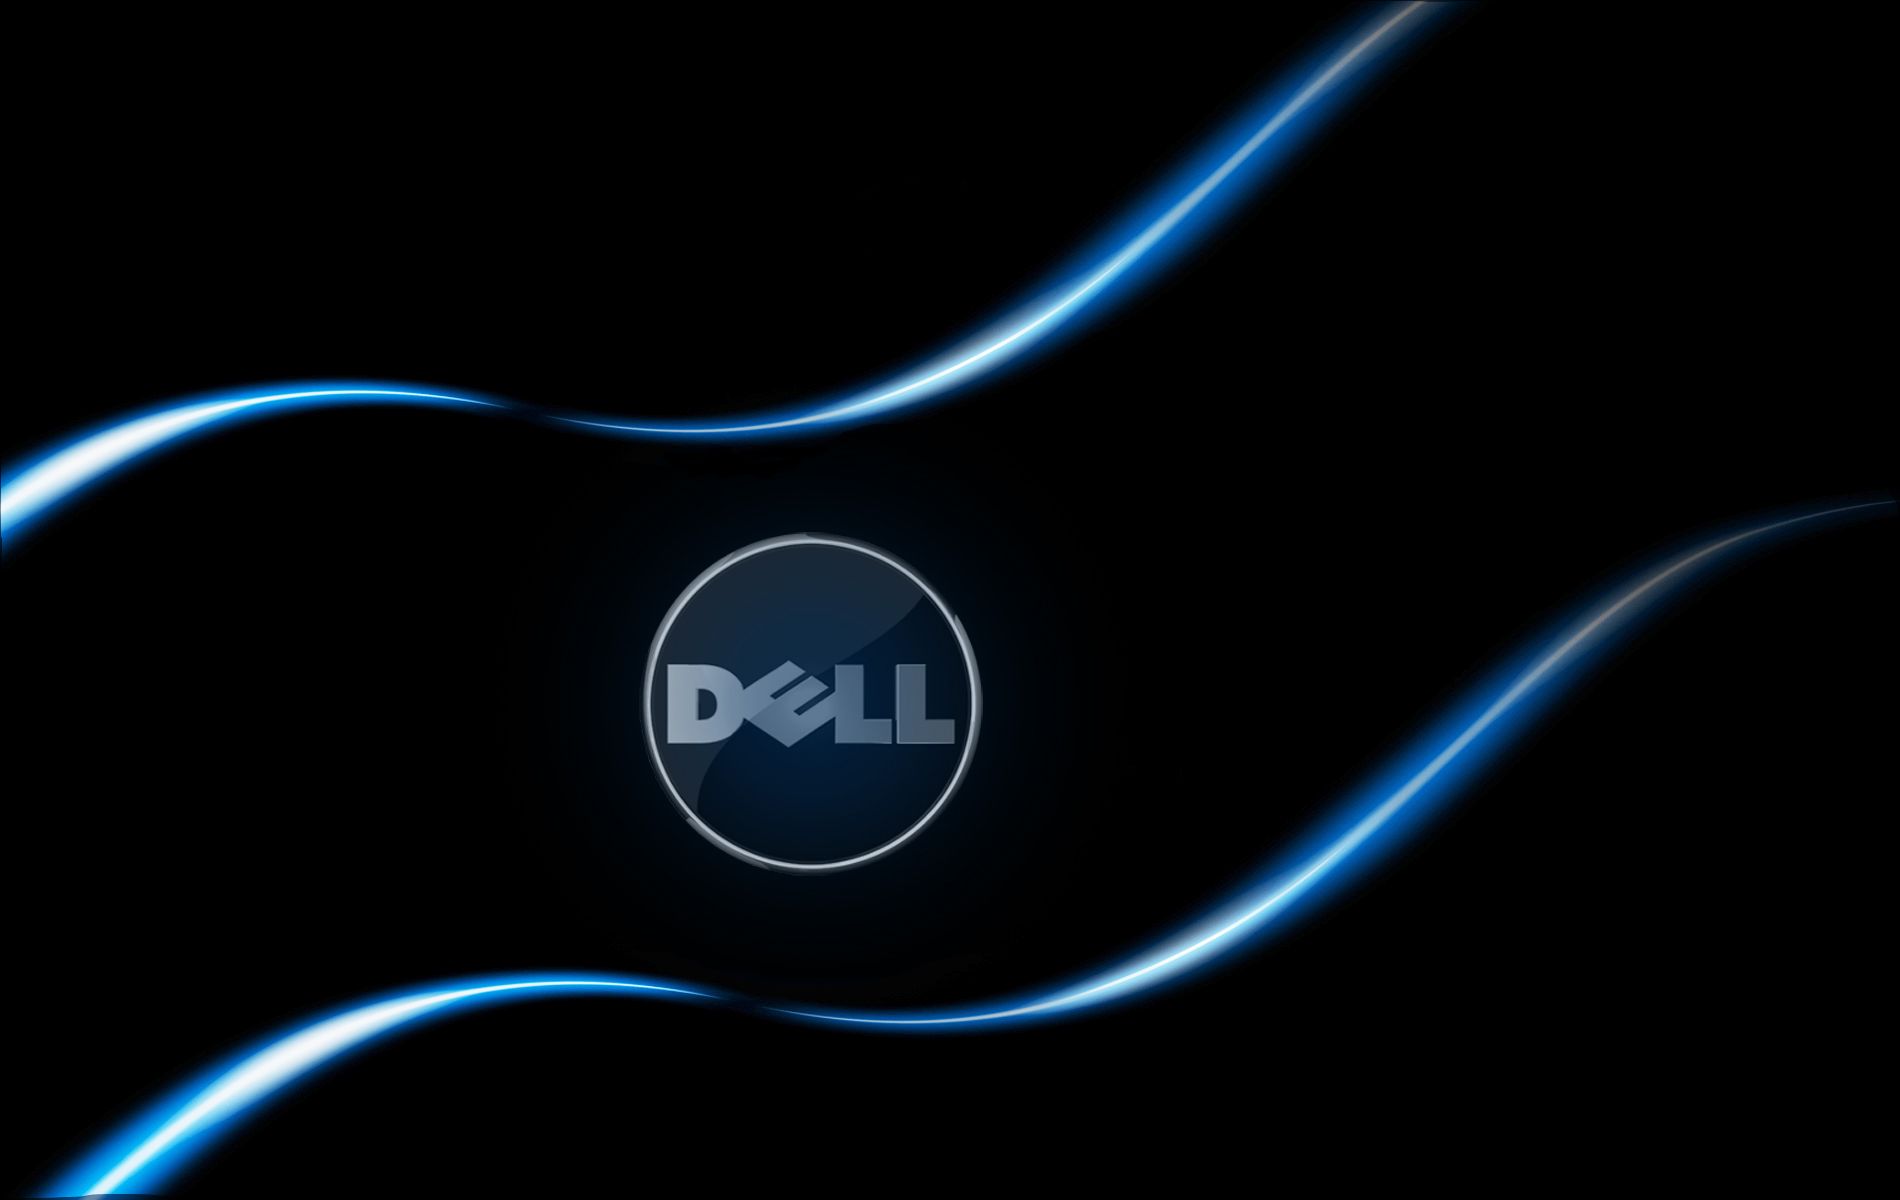 Dell Logo Wallpaper. Dell Wallpaper, Dell Venue Pro Wallpaper and Dell Wallpaper Background